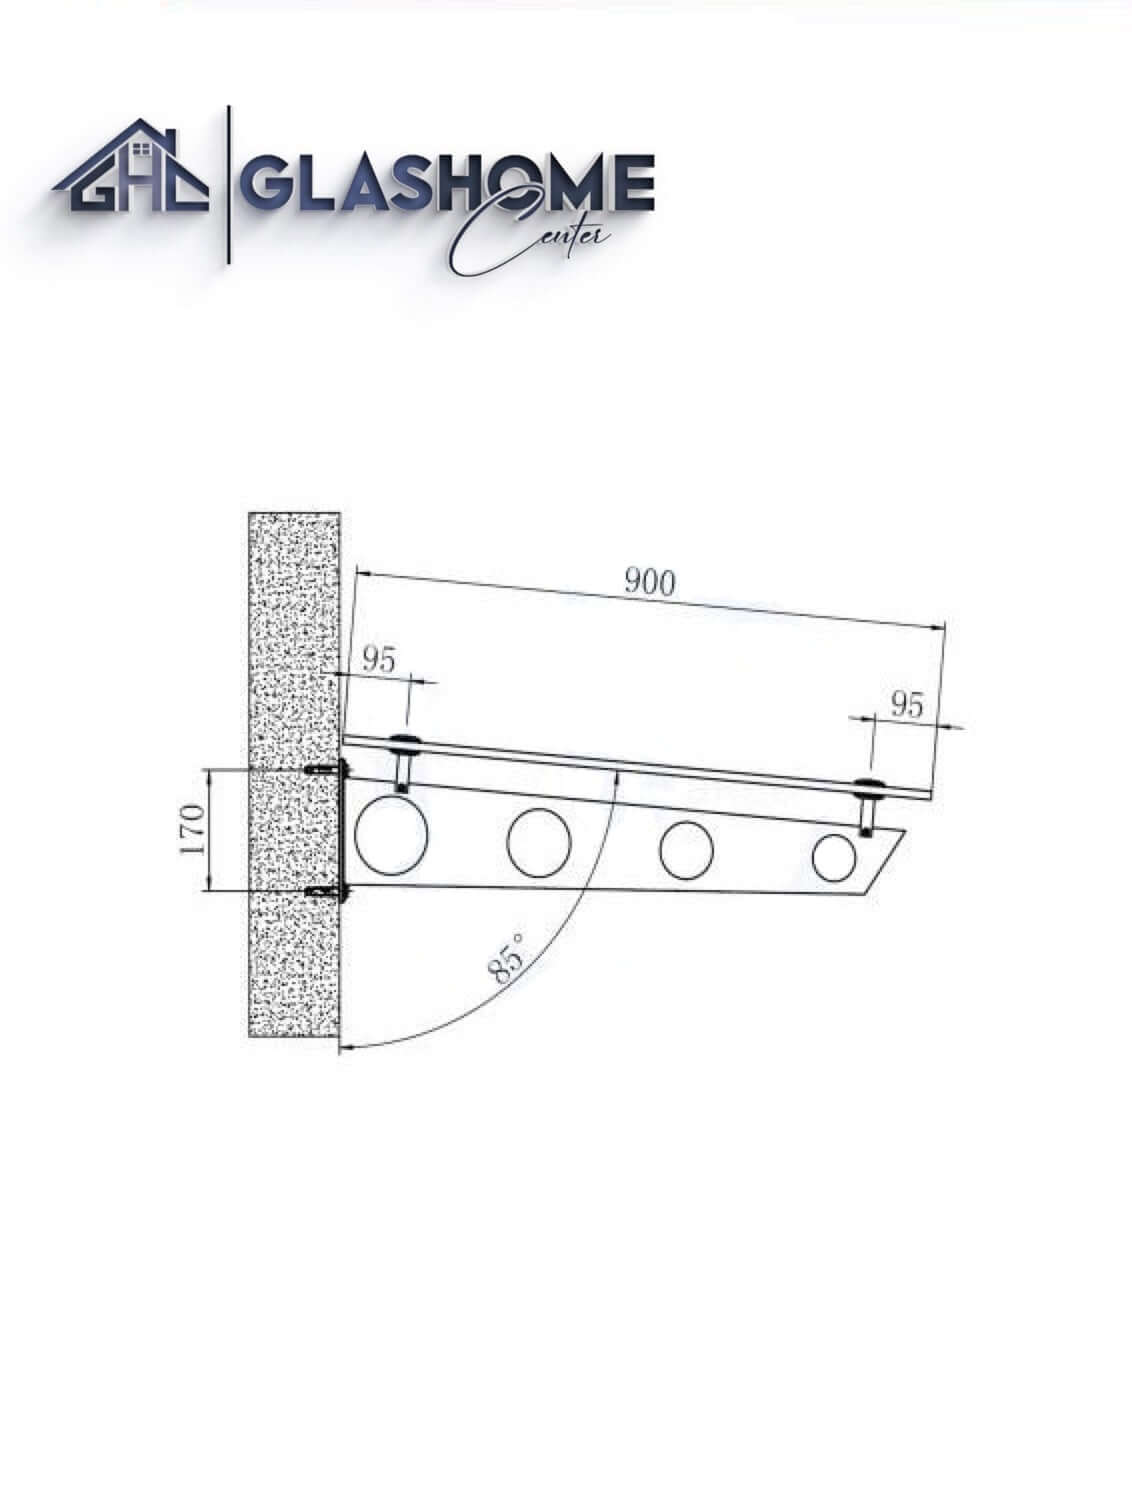 GlasHomeCenter - glass canopy - Clear glass - 200x90cm - 13.1mm VSG - incl. 3 Edelstahlhalterungen Variant "Stockholm"